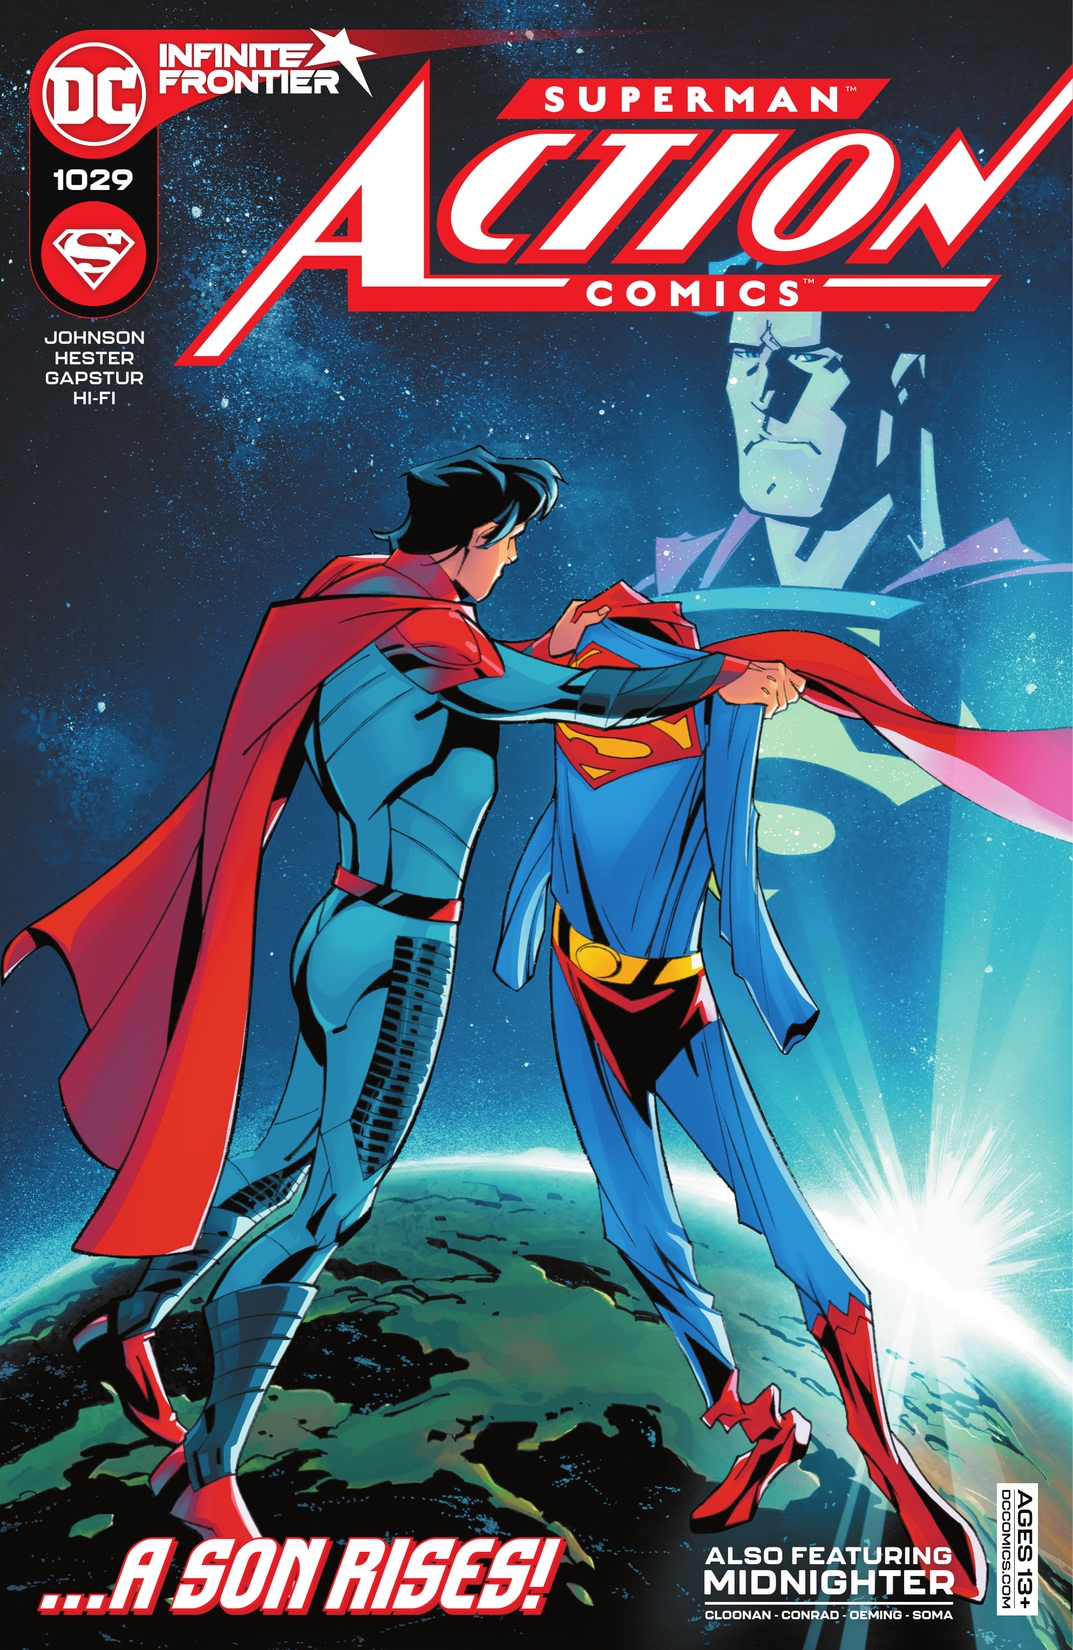 Action Comics (2016-) #1029 preview images